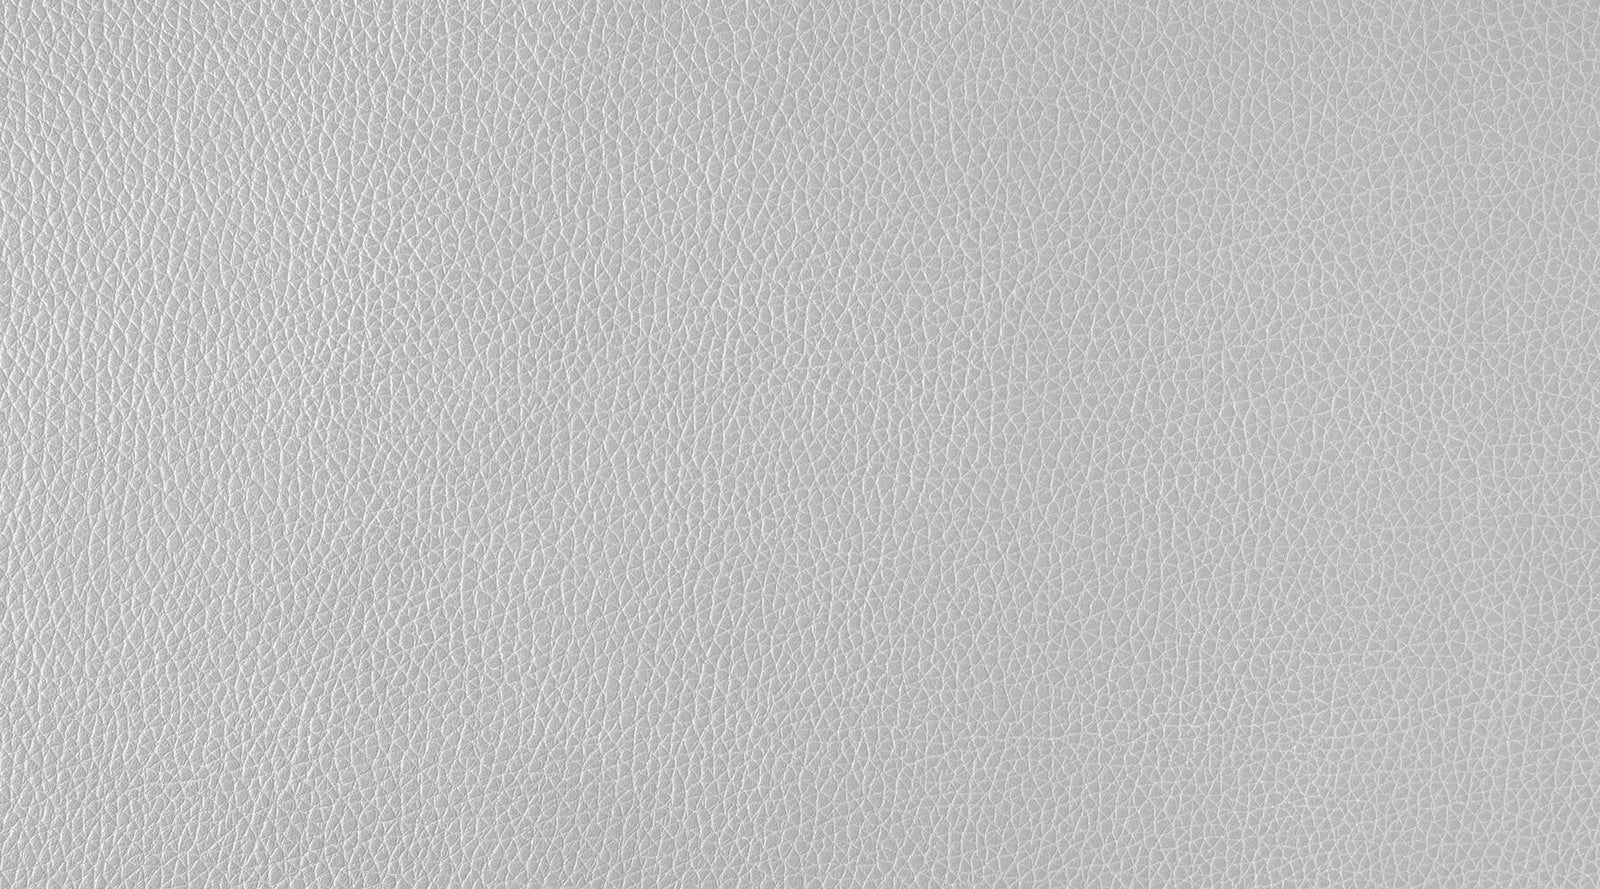 Vinyl Fabric Swatch in Gray | Pakapalooza